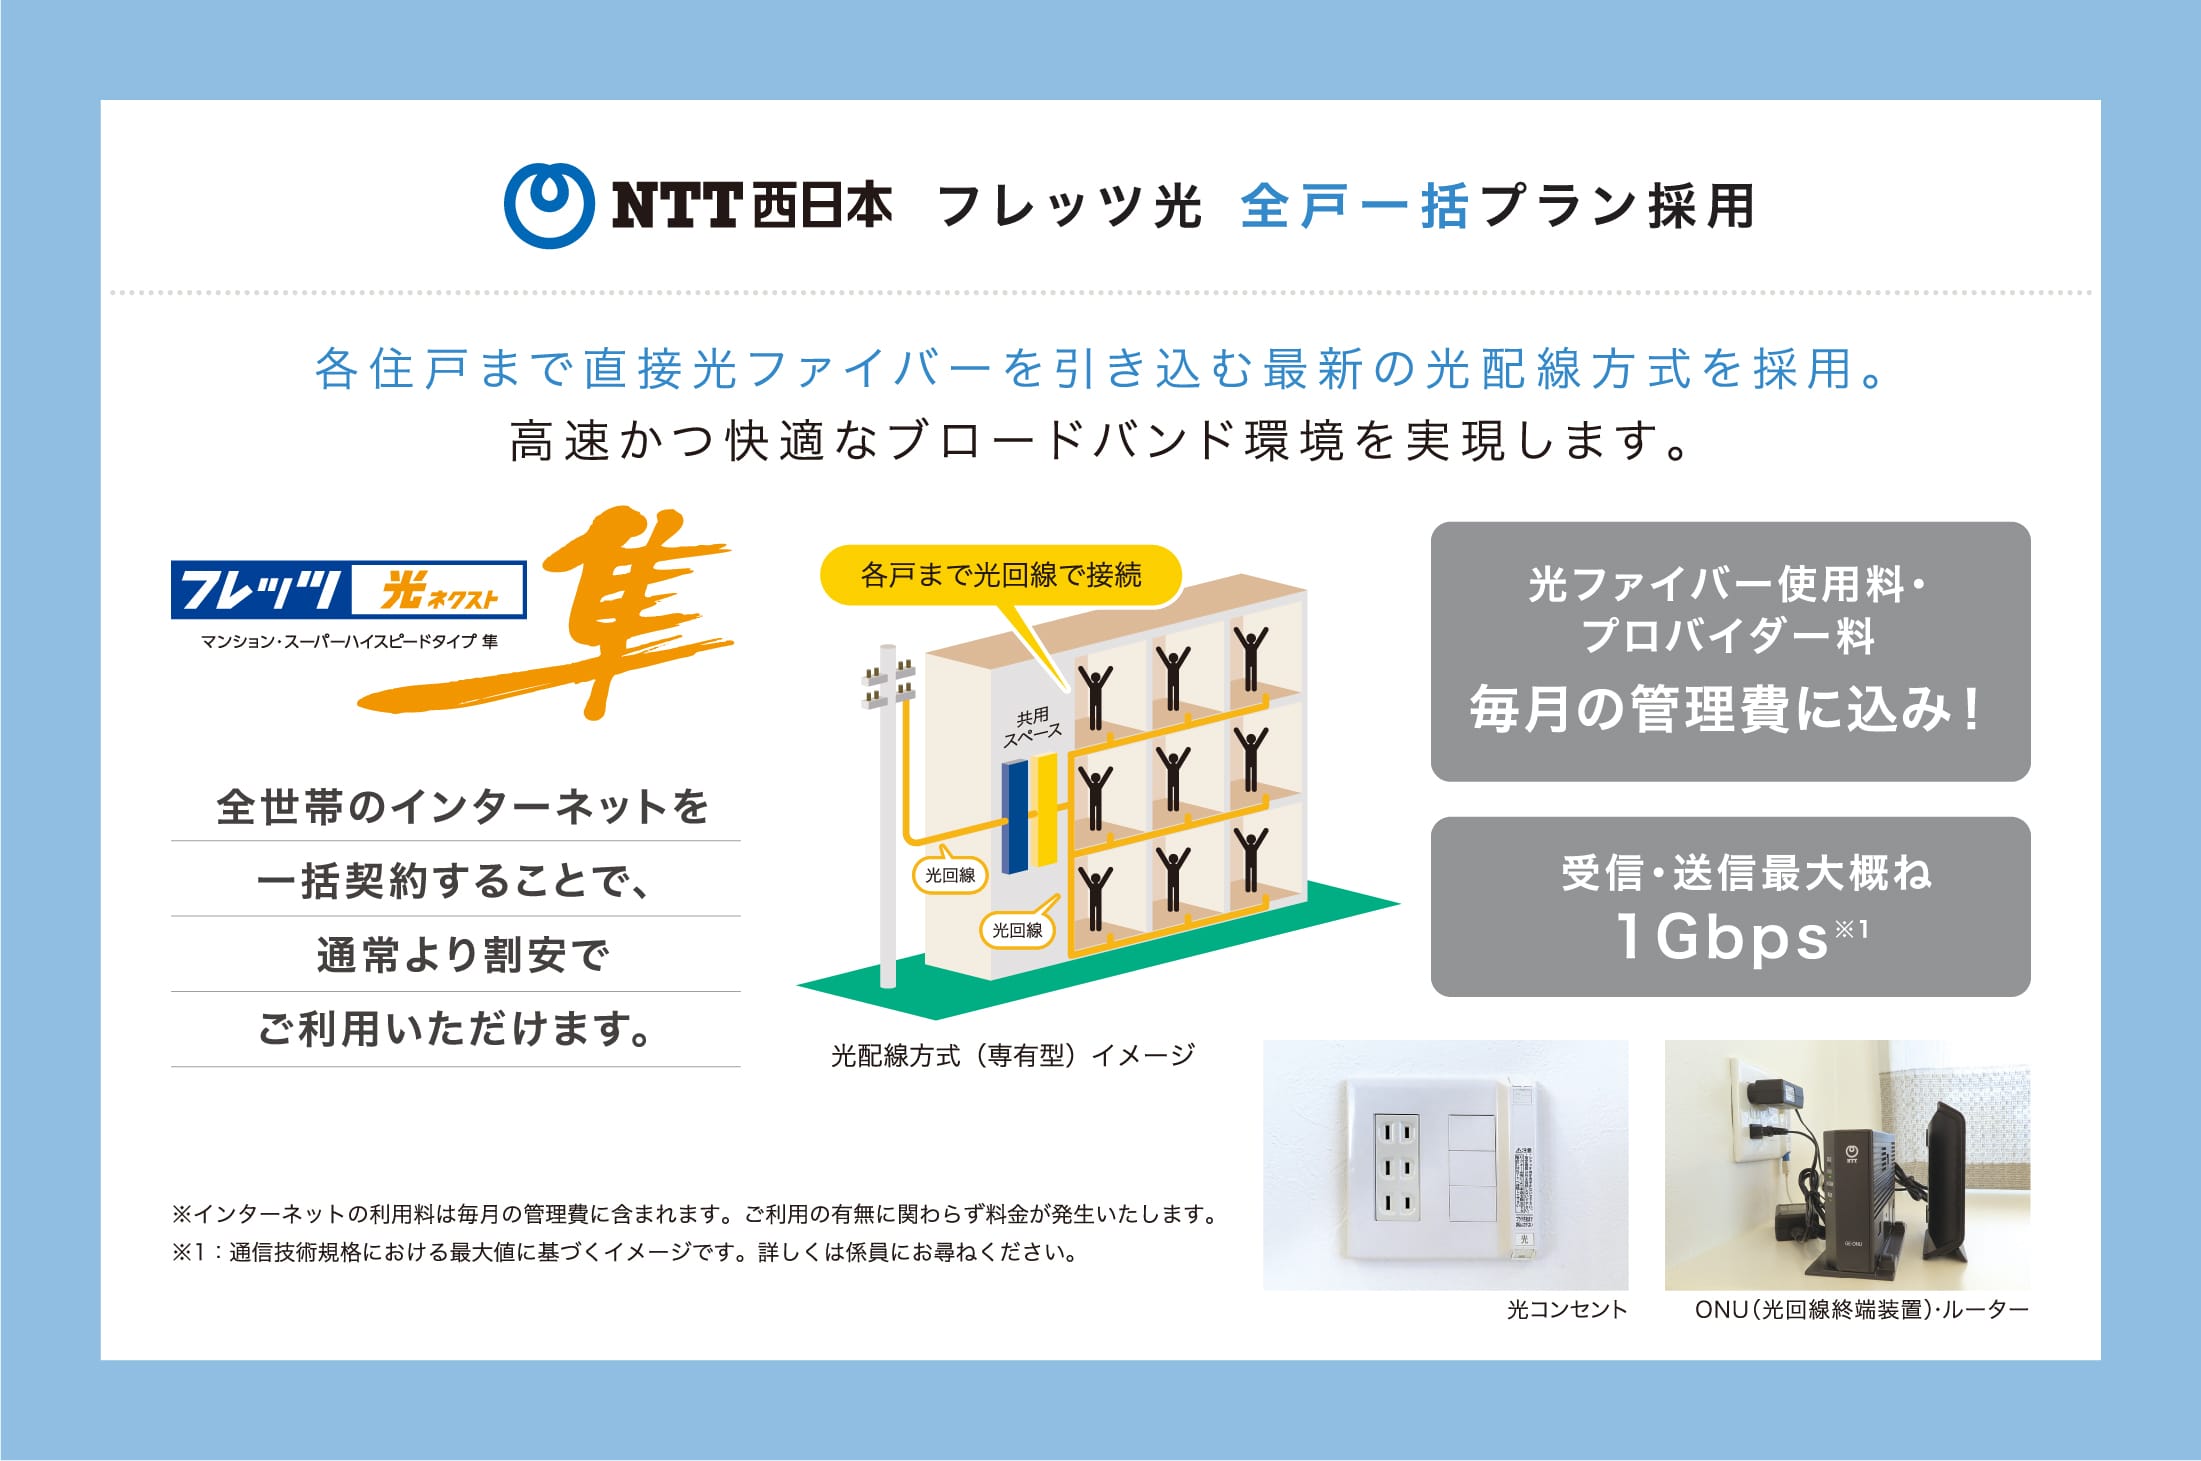 NTT西日本 フレッツ光 全戸一括プラン採用